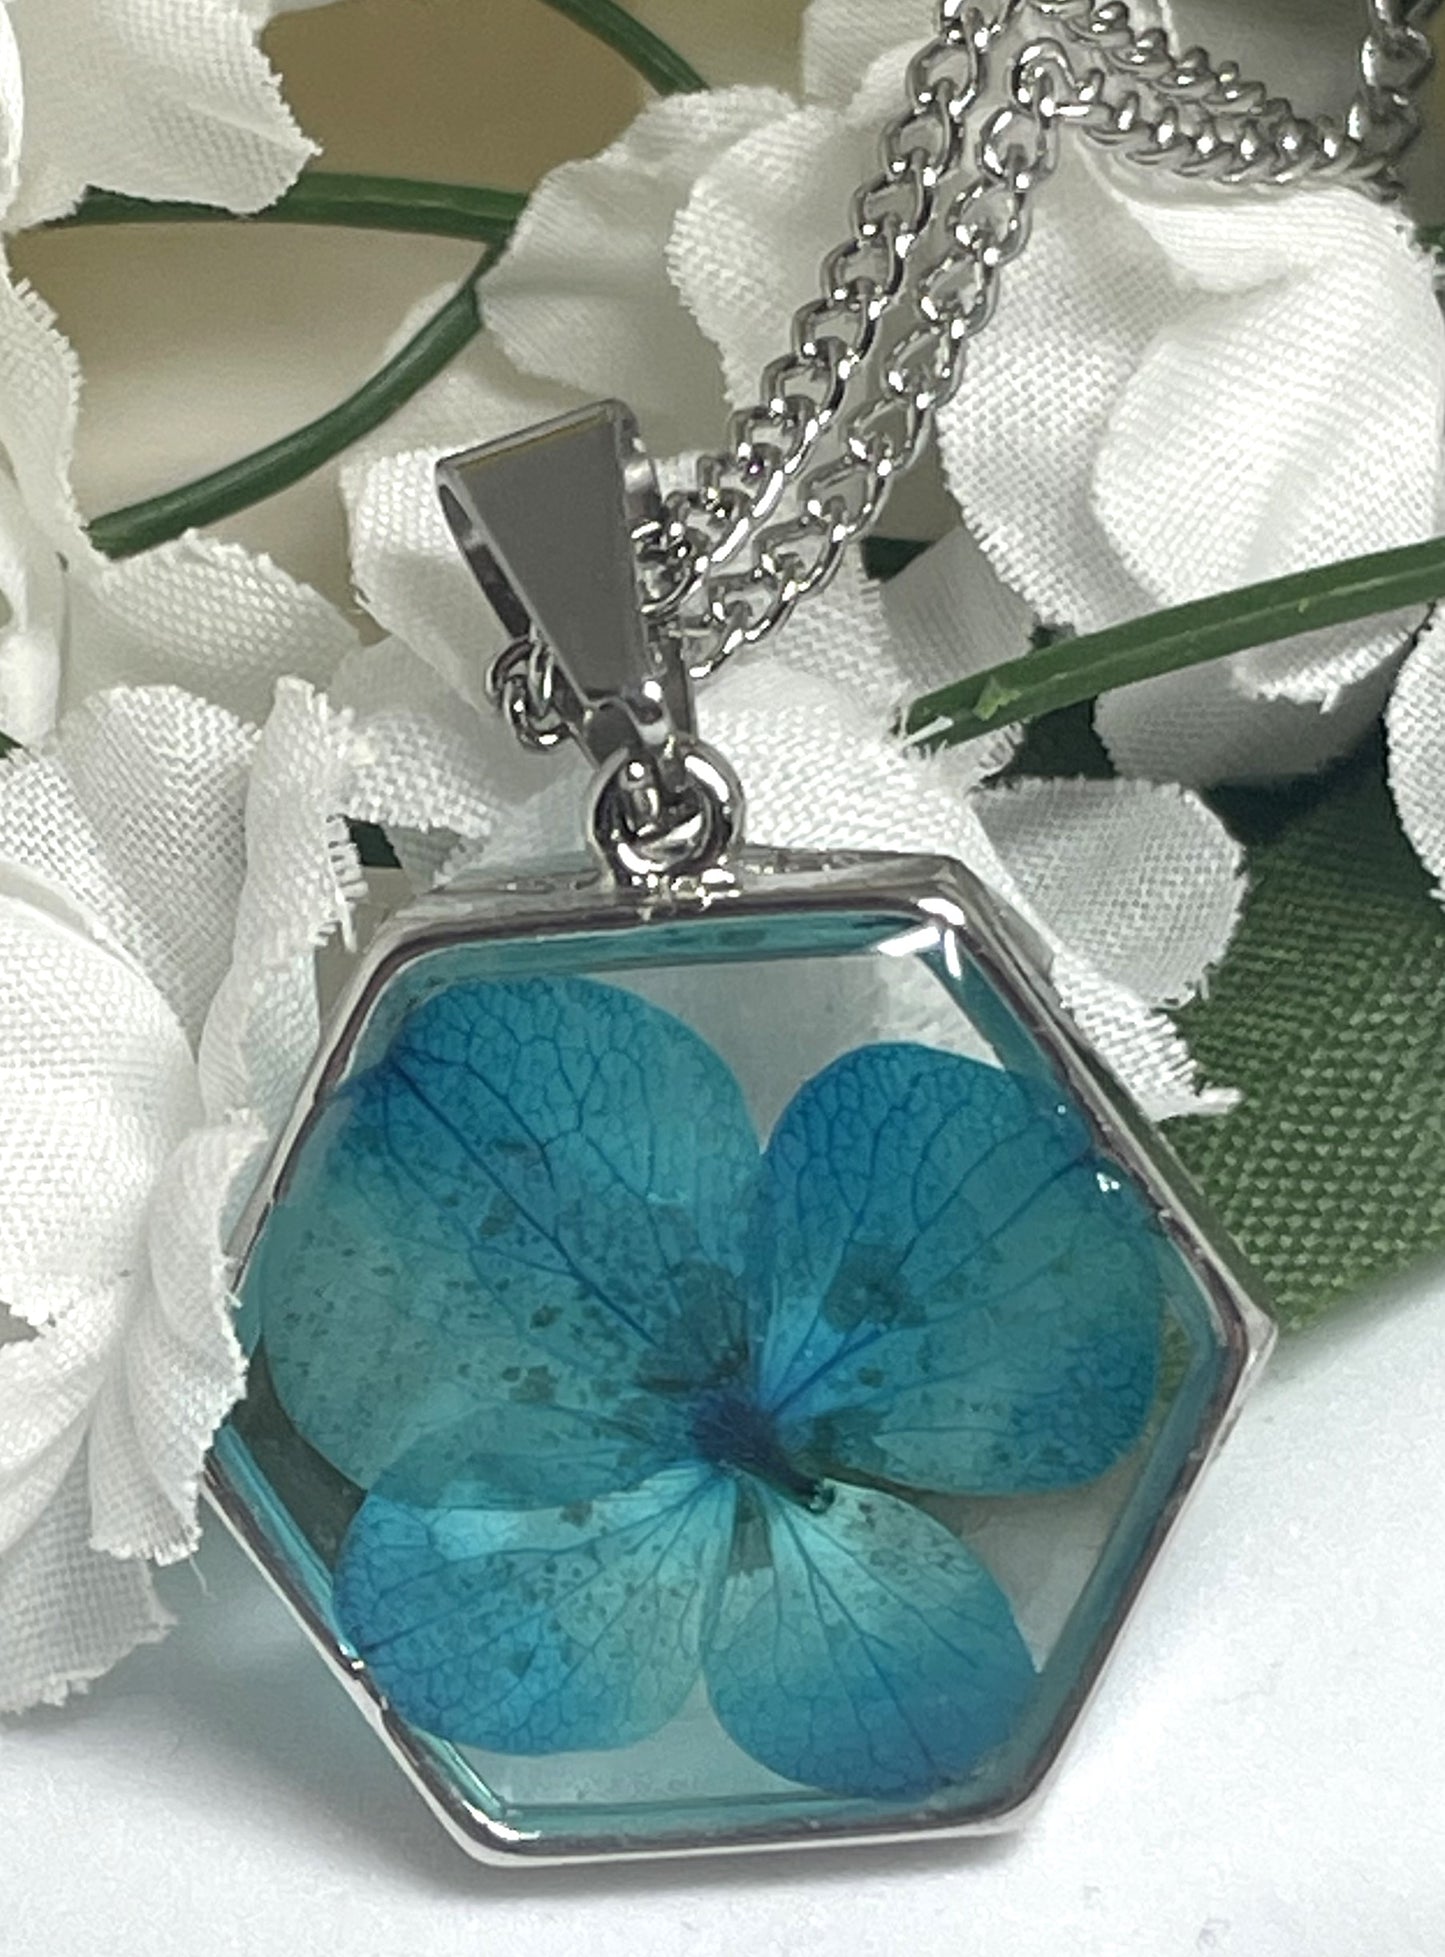 Necklace- Blue Hydrangea Hexagon Pendant